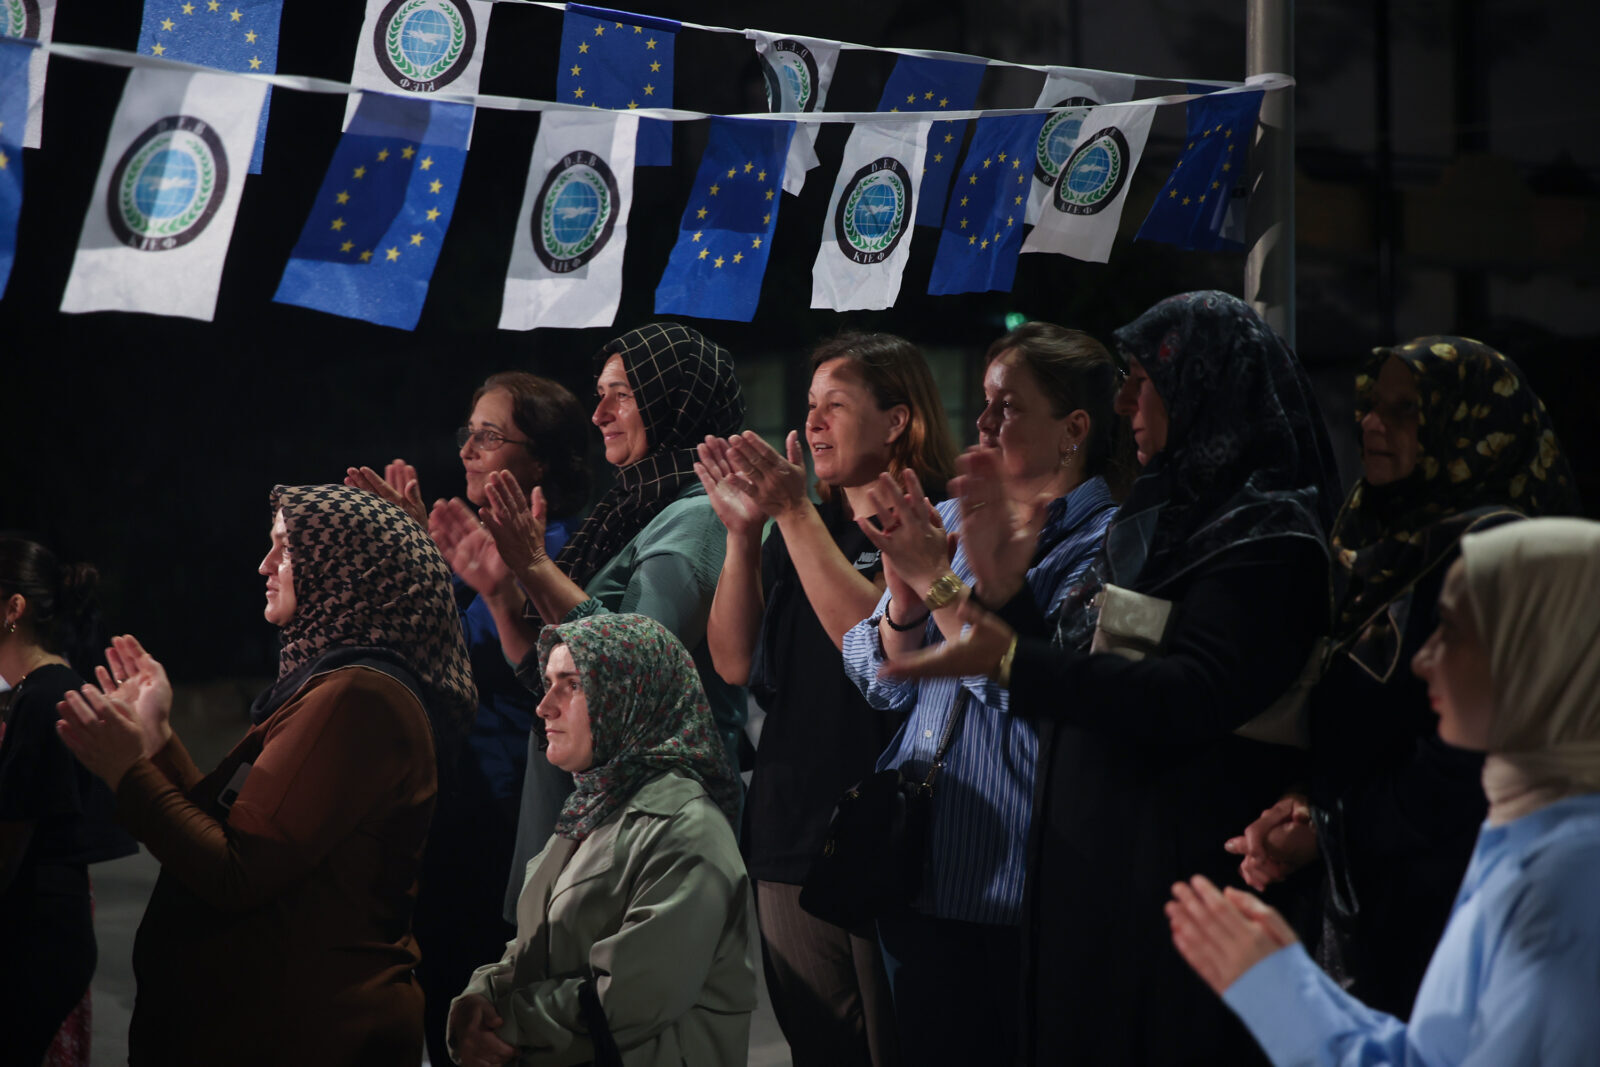 Turkish minorities in Greece partake in European Parliament elections